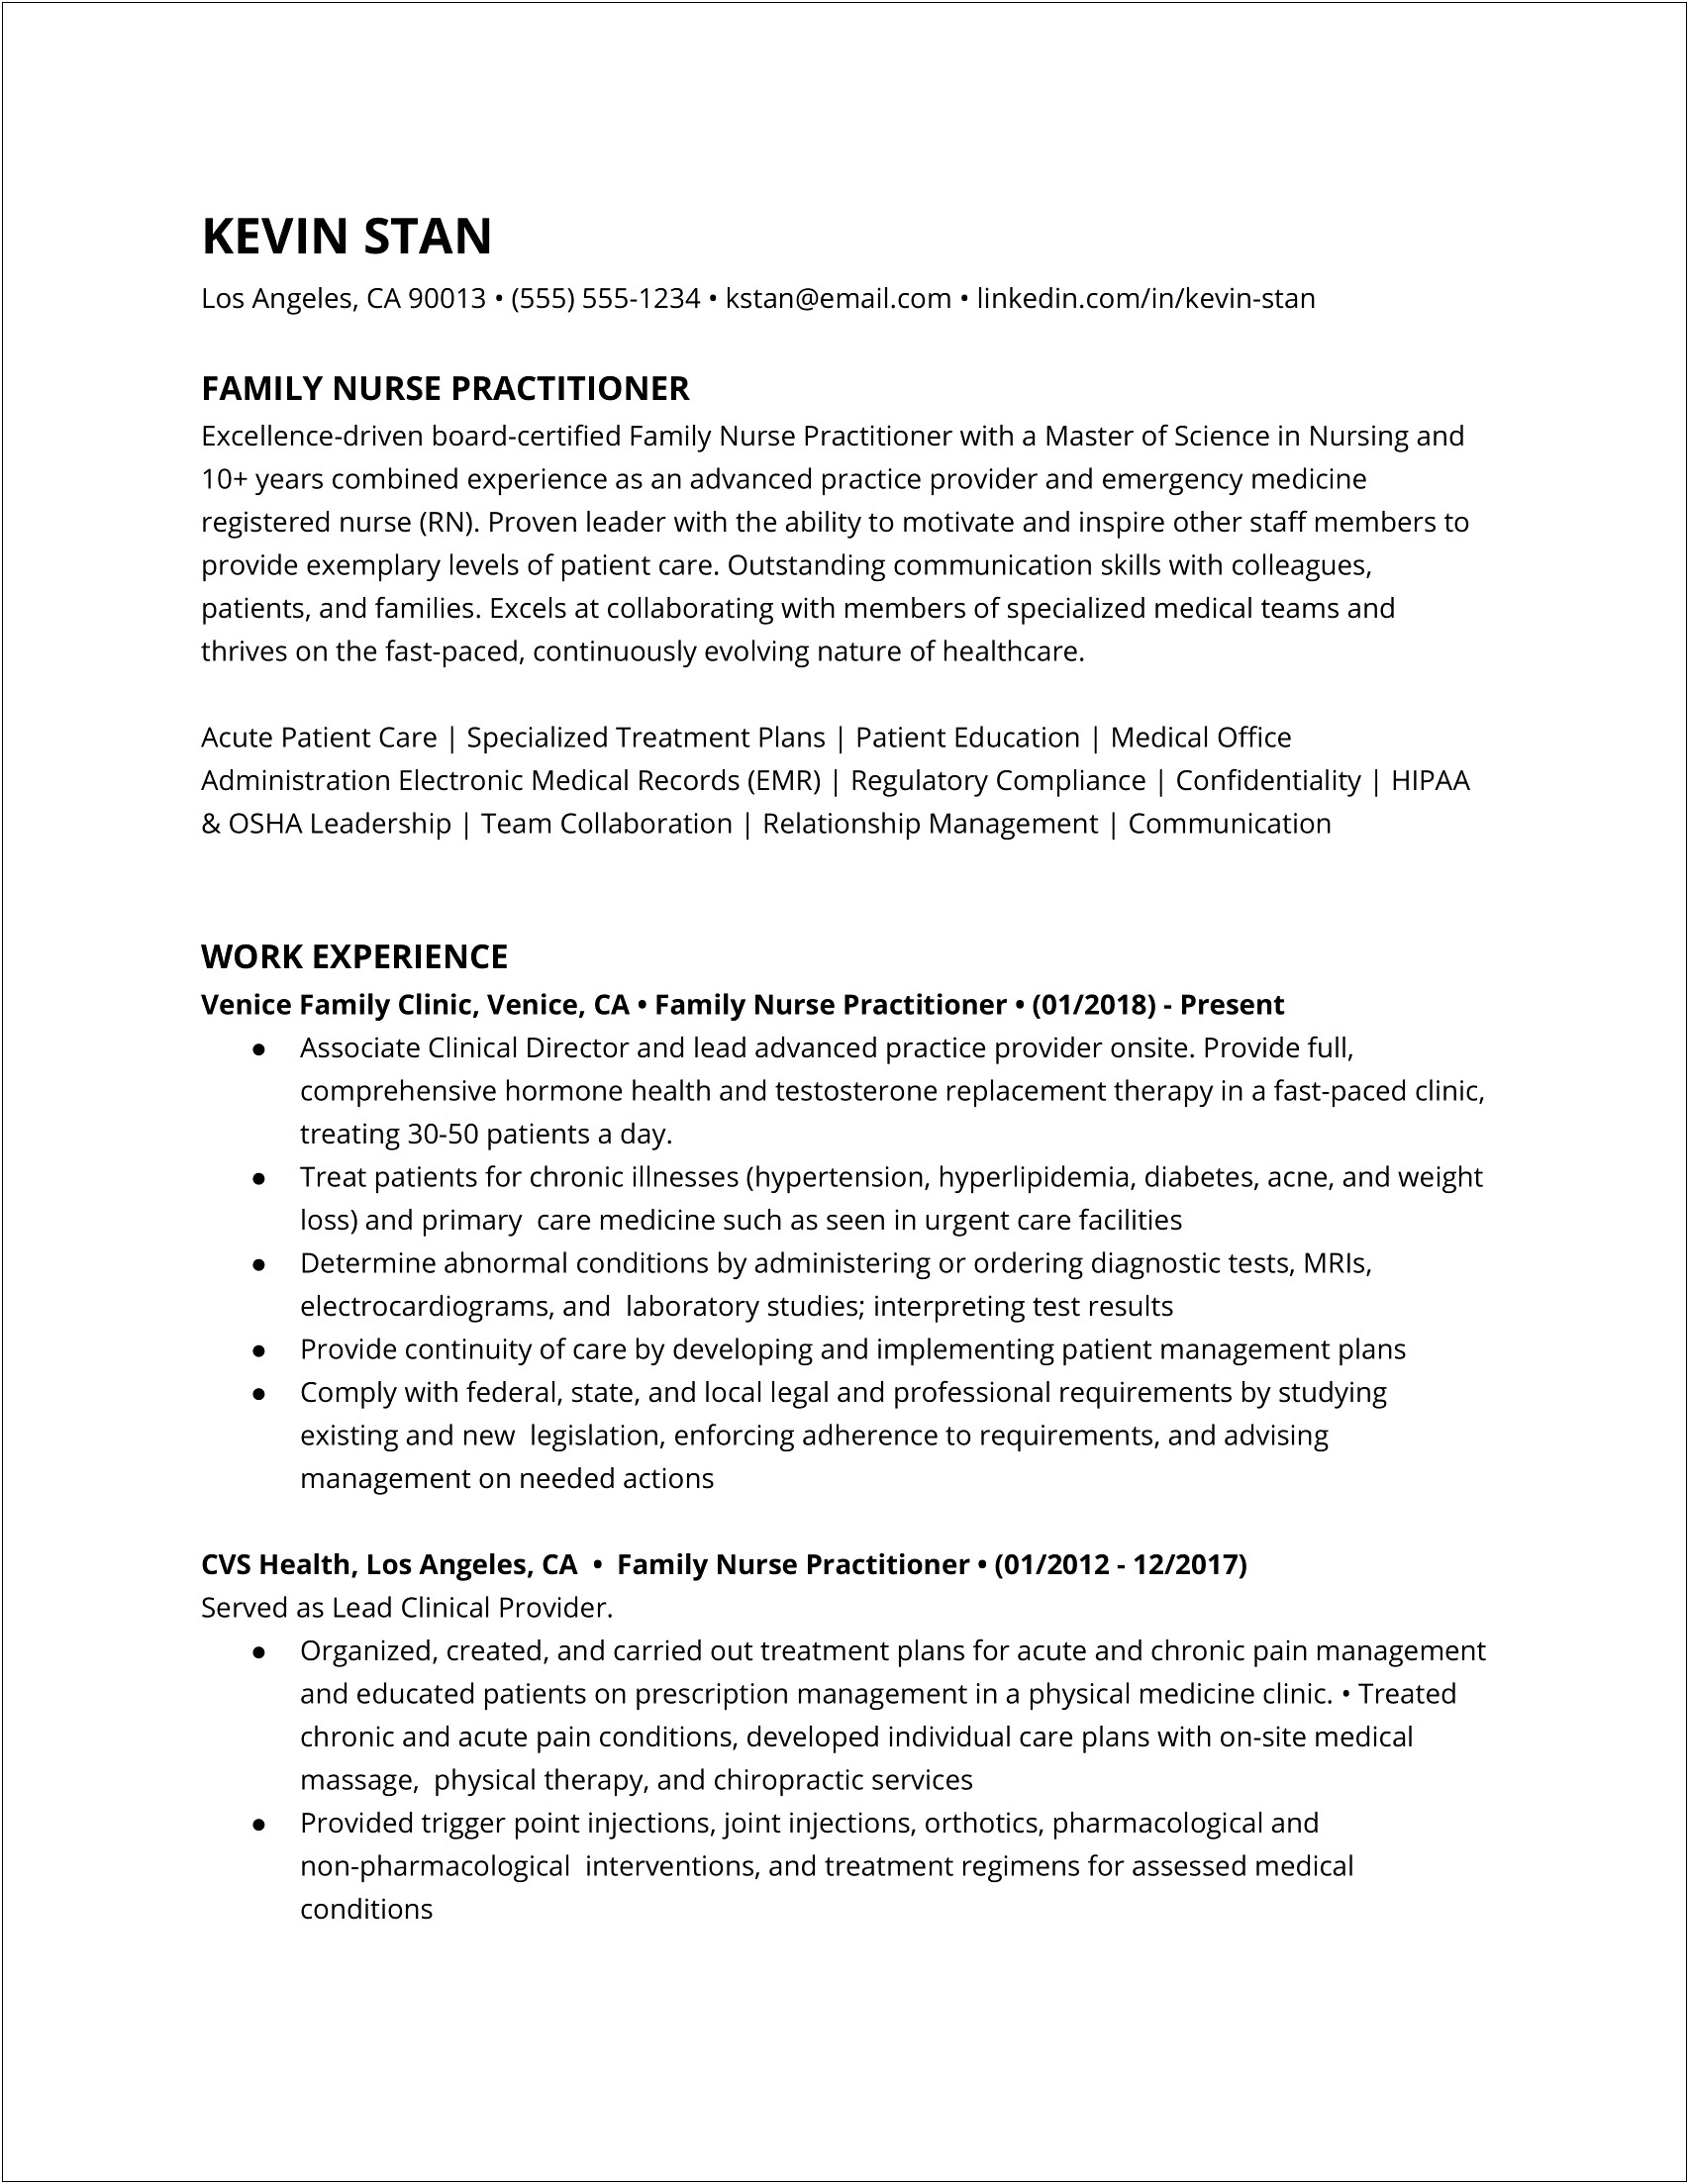 Sample Resume For Entry Level Nurse Practitioner